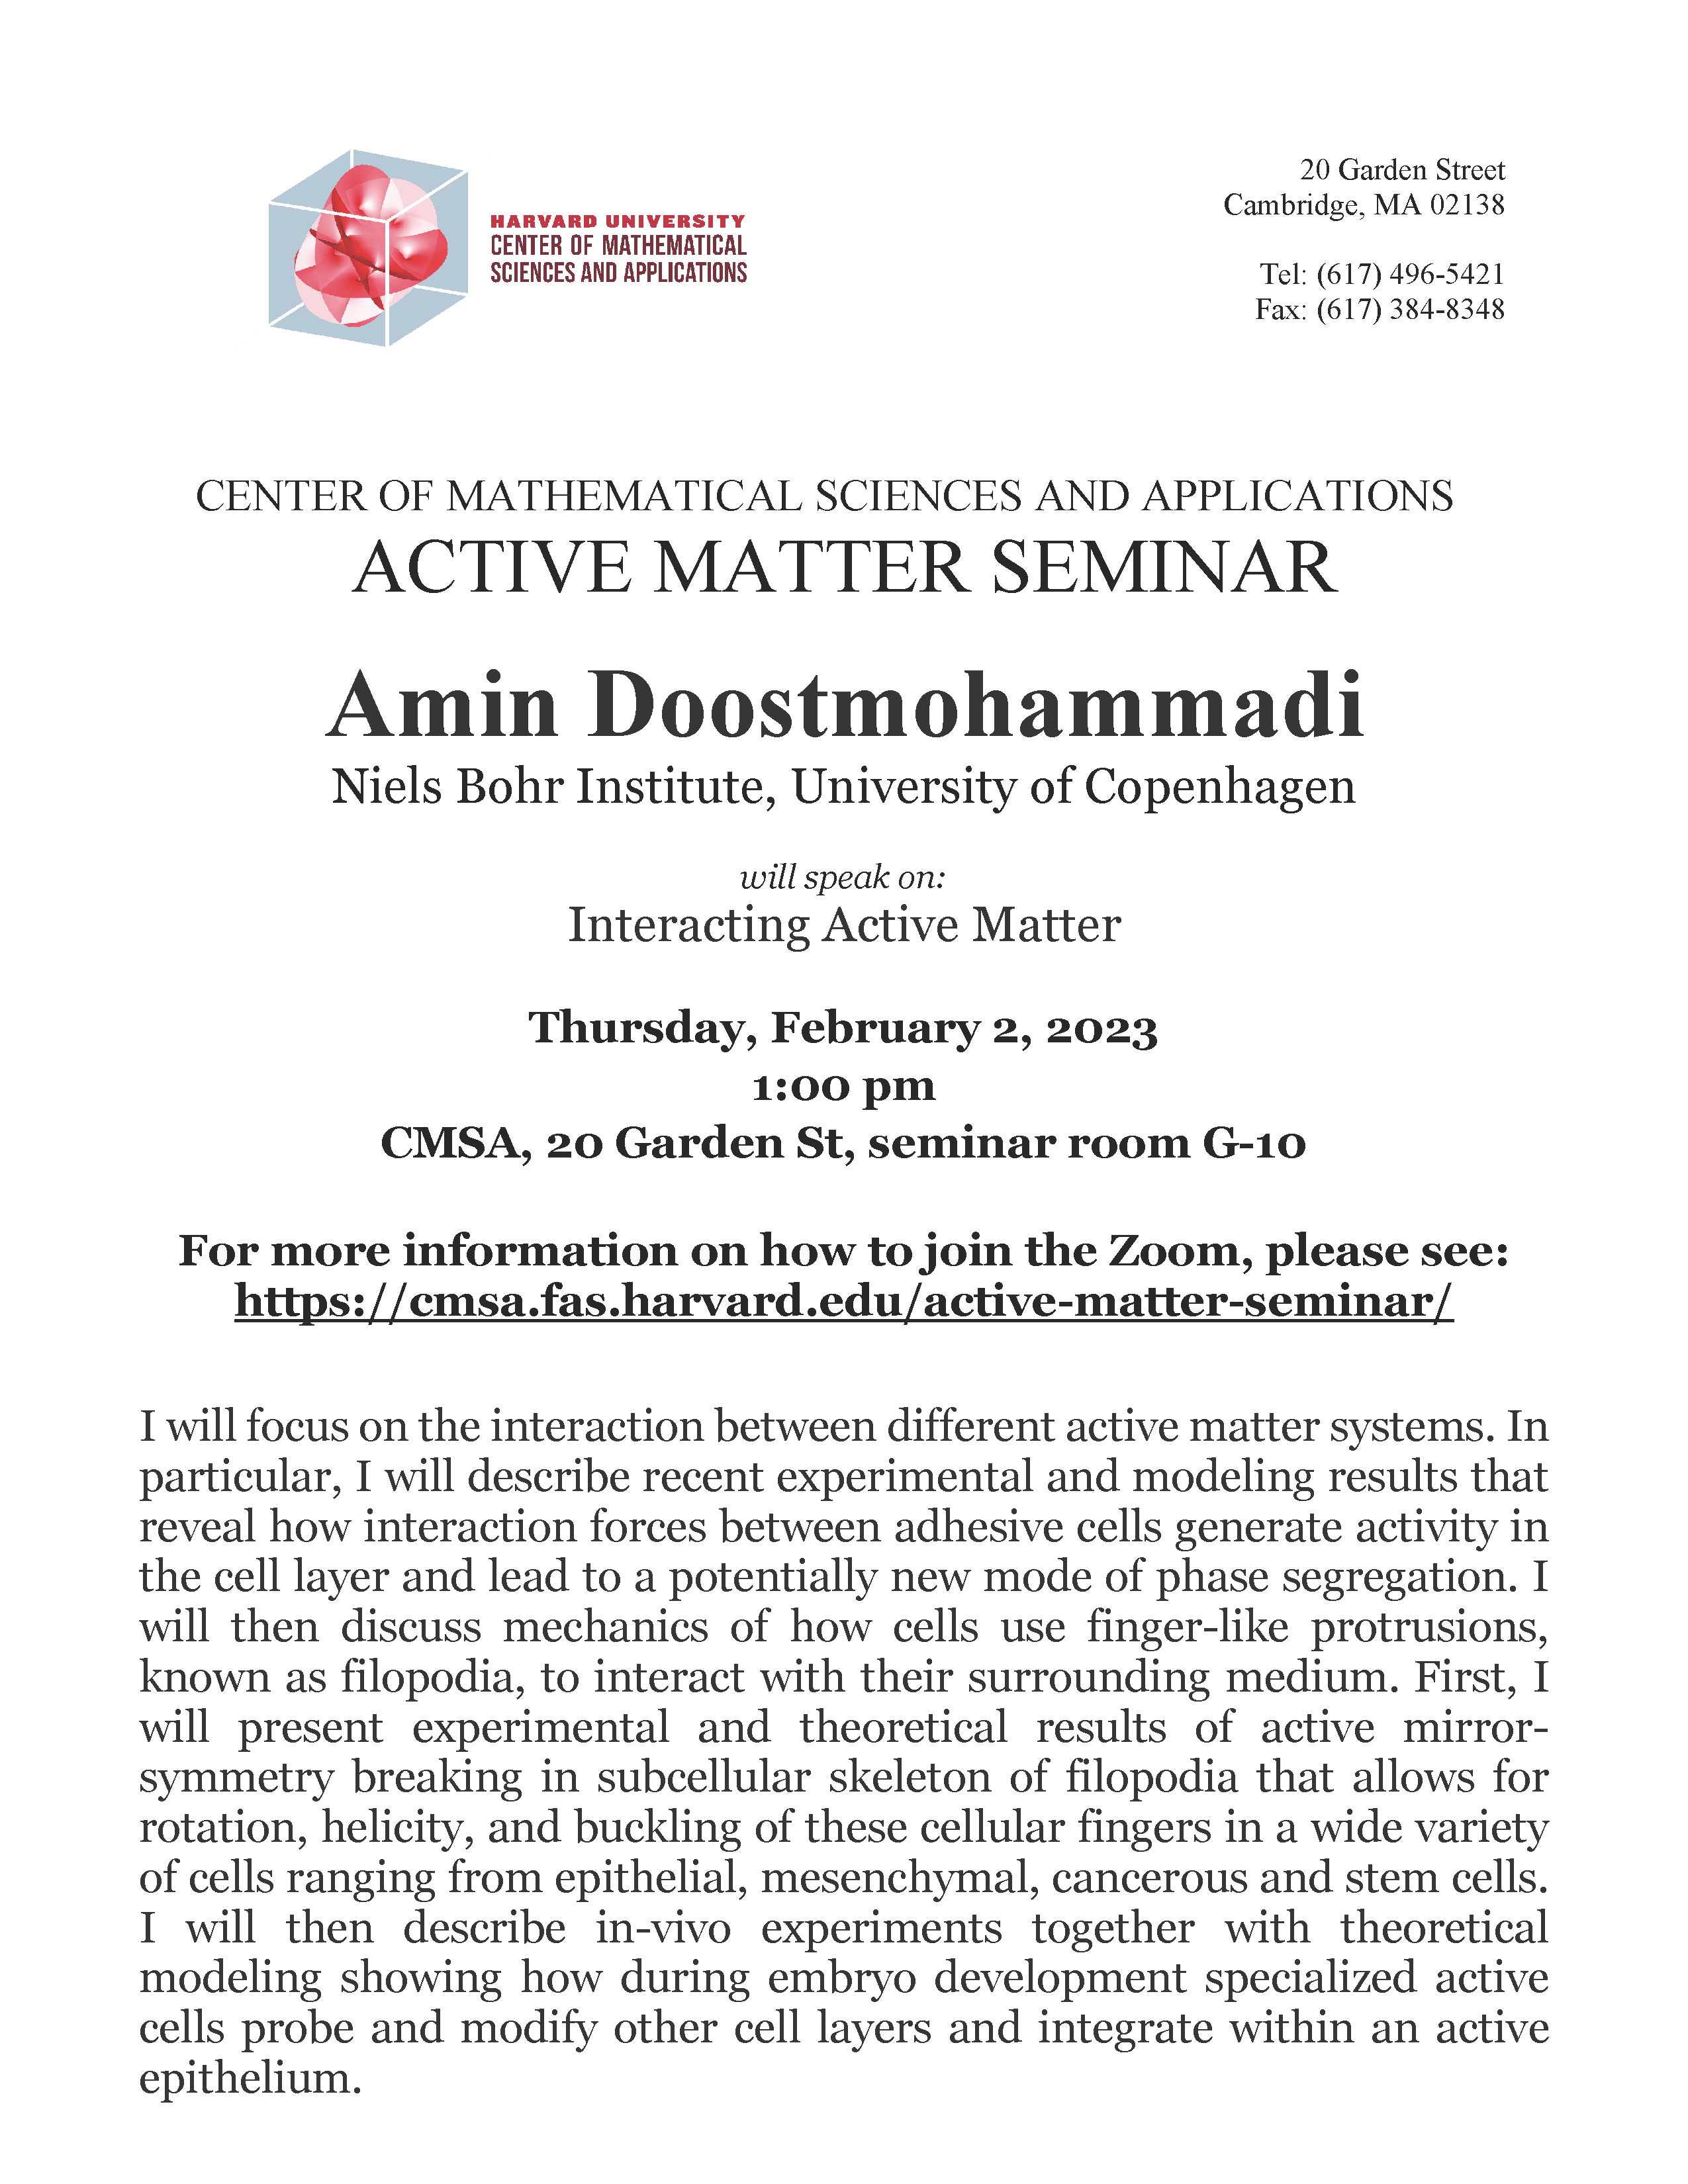 CMSA Active Matter Seminar 02.02.23